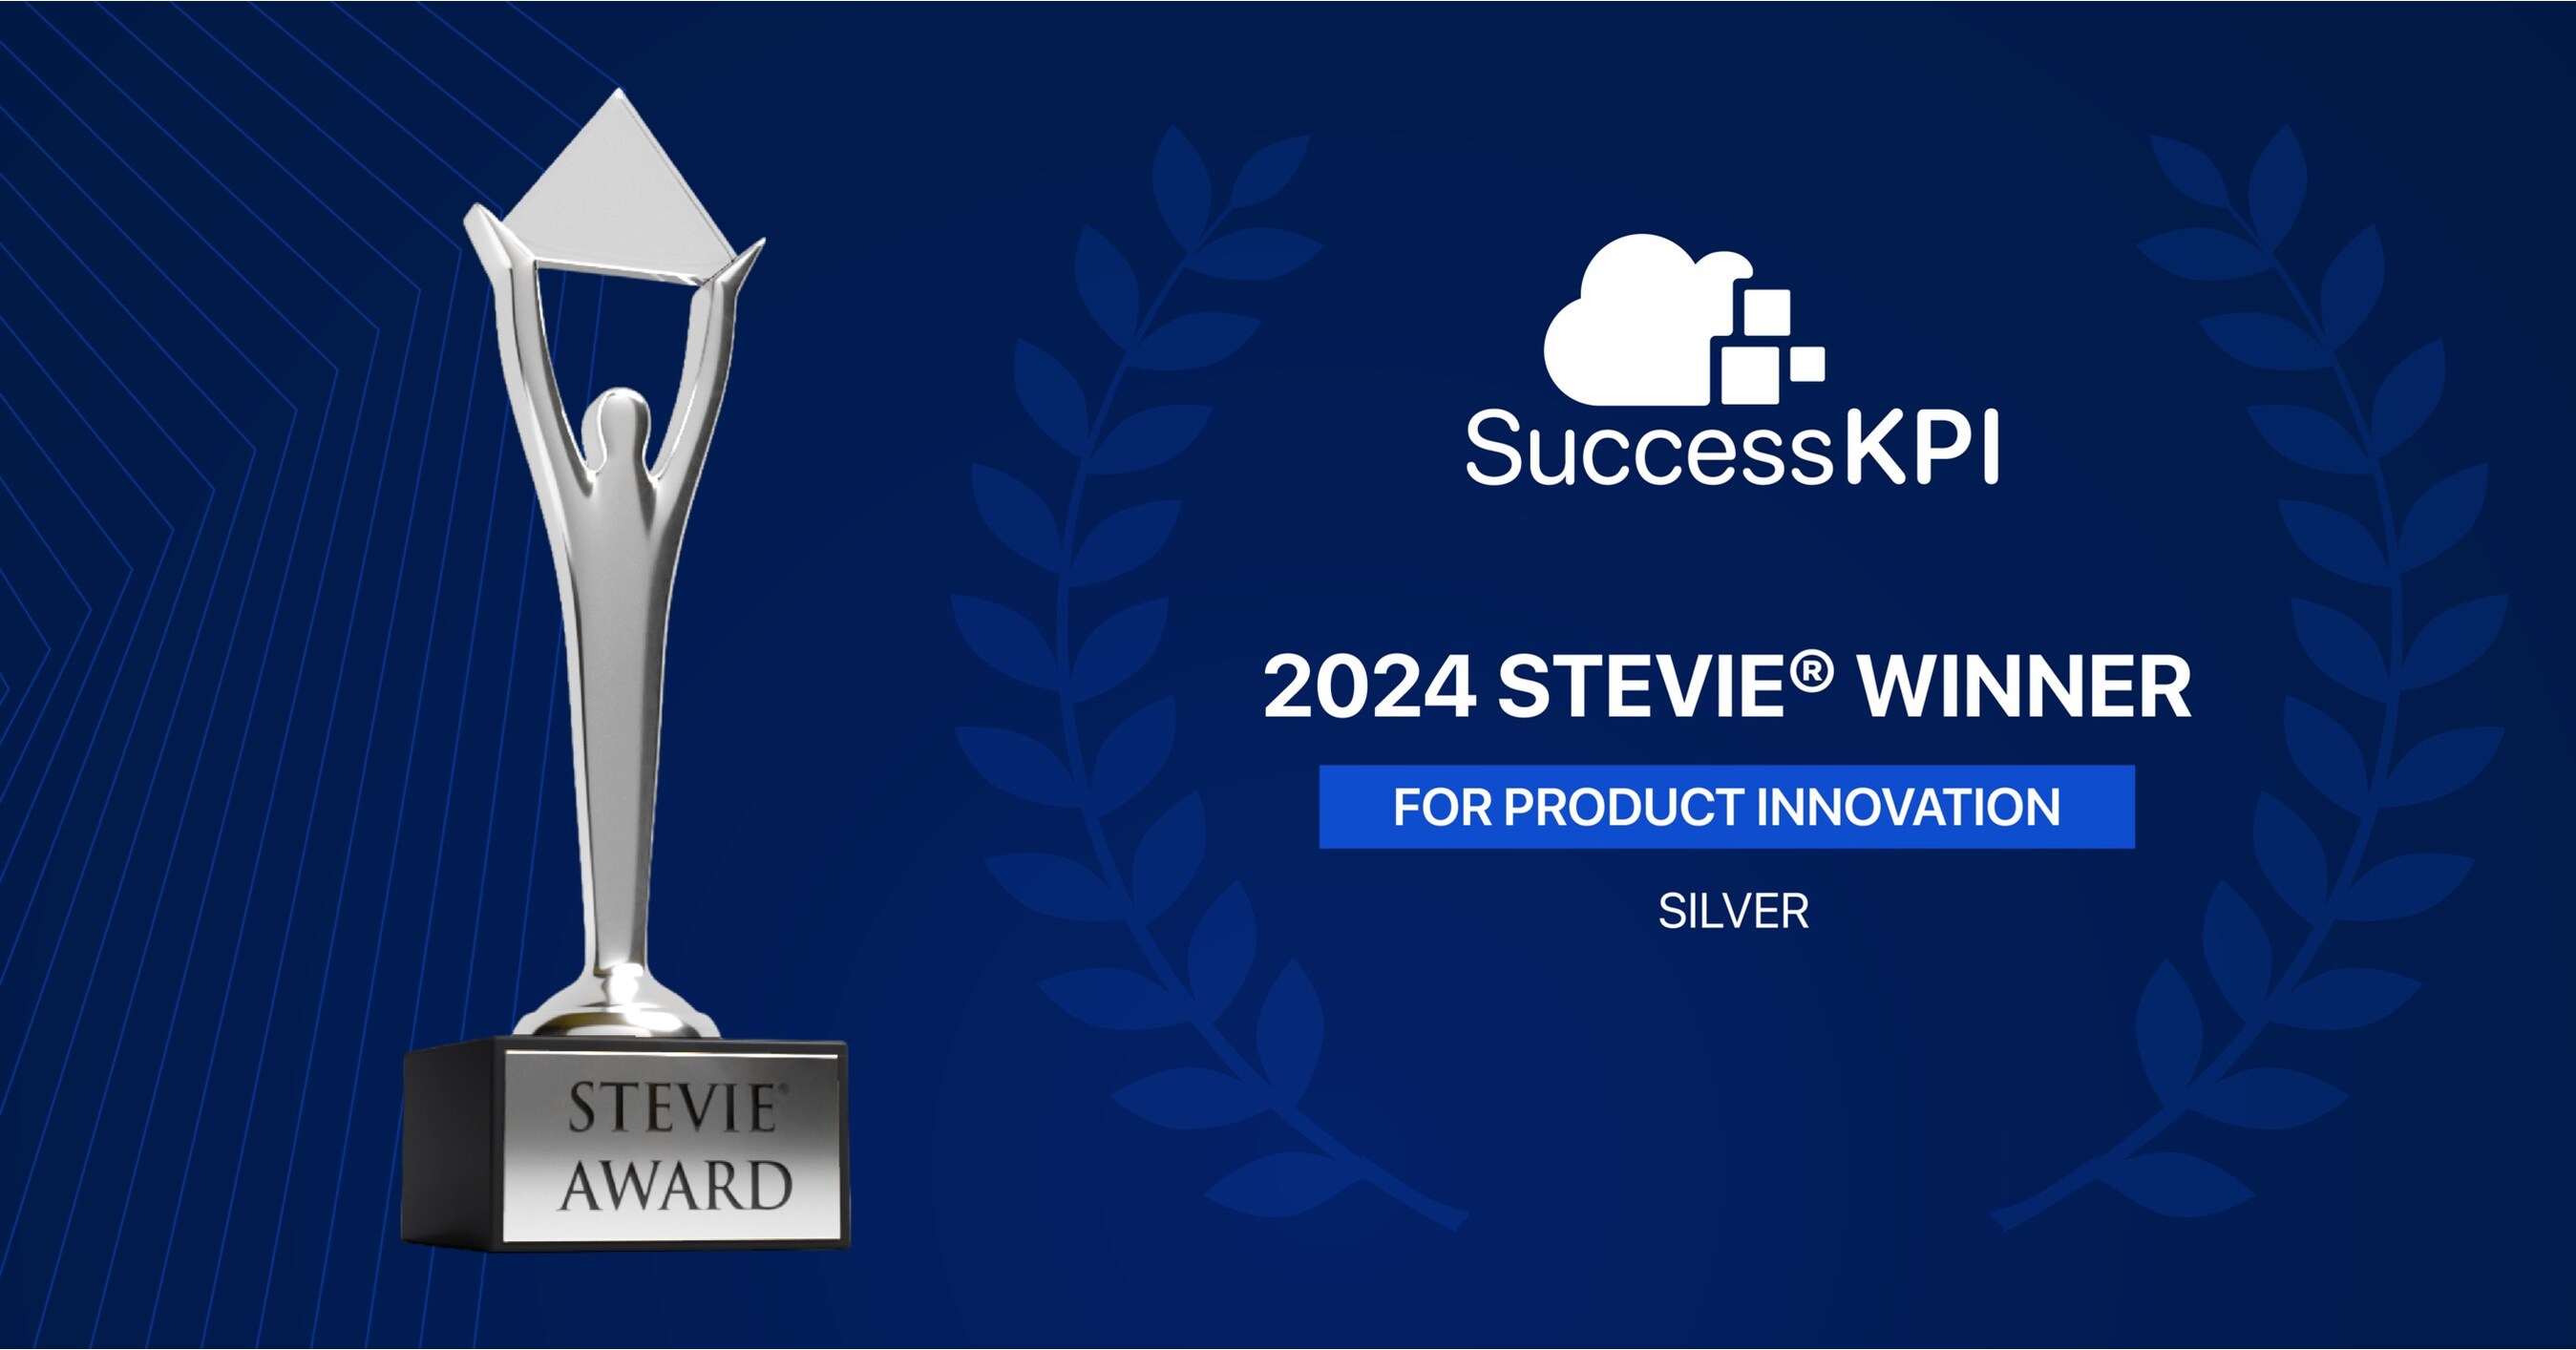 SuccessKPI凭借人工智能质量管理评分解决方案在产品创新方面的成就荣获美国商业奖®